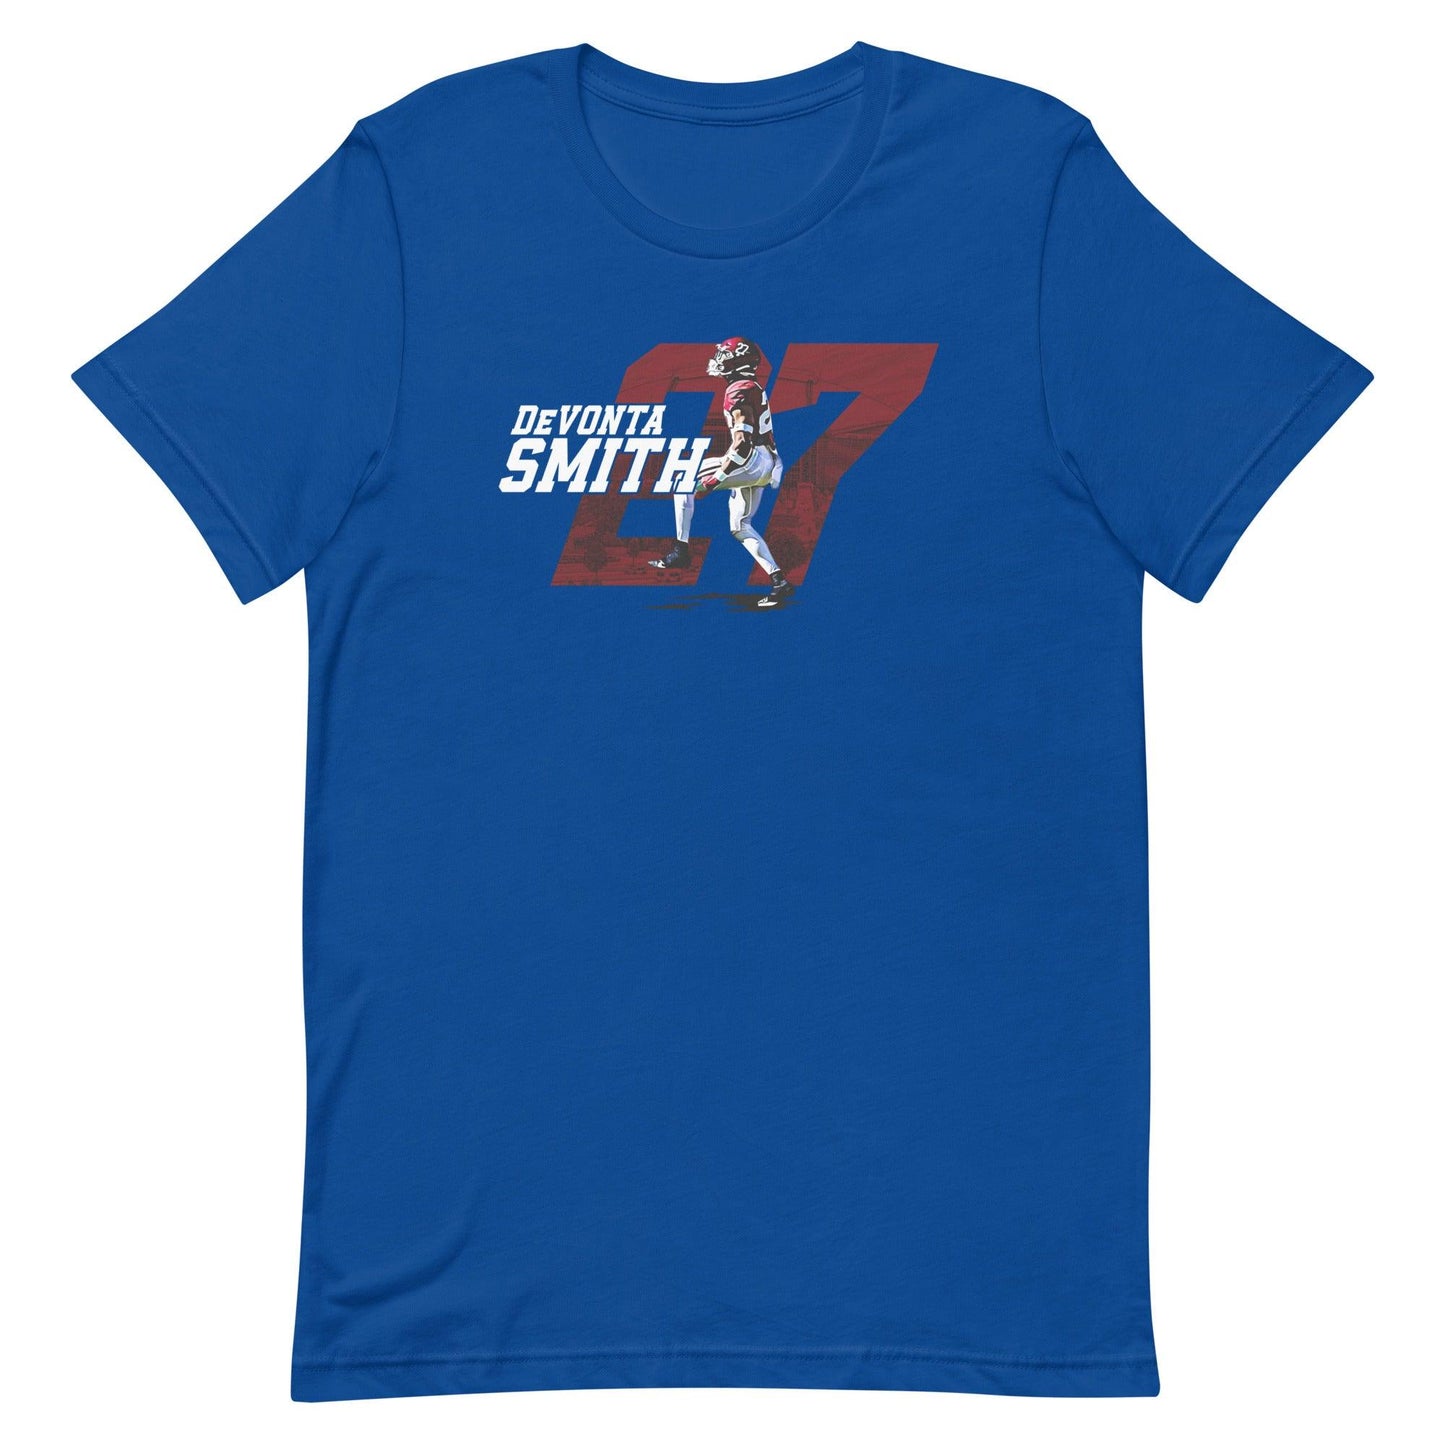 Devonta Smith "27" t-shirt - Fan Arch